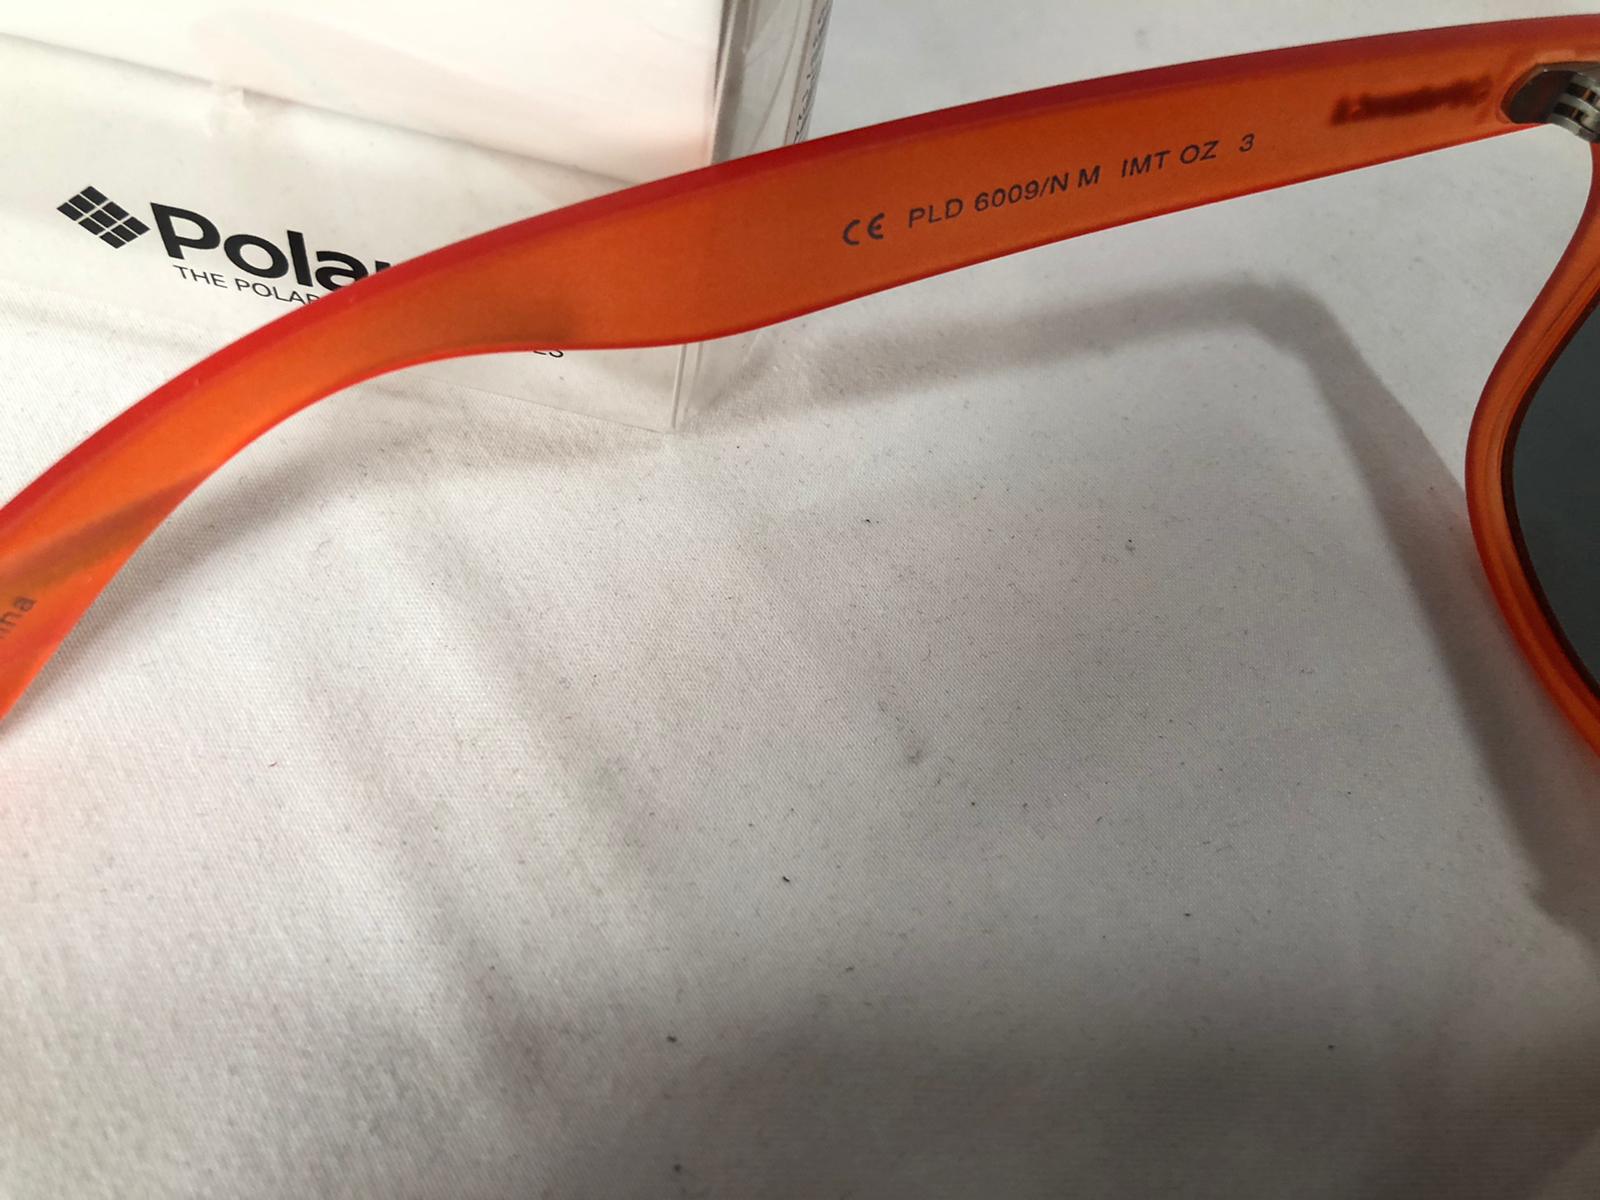 Polaroid Rainbow Polarized Sunglasses with Cleaning Kit